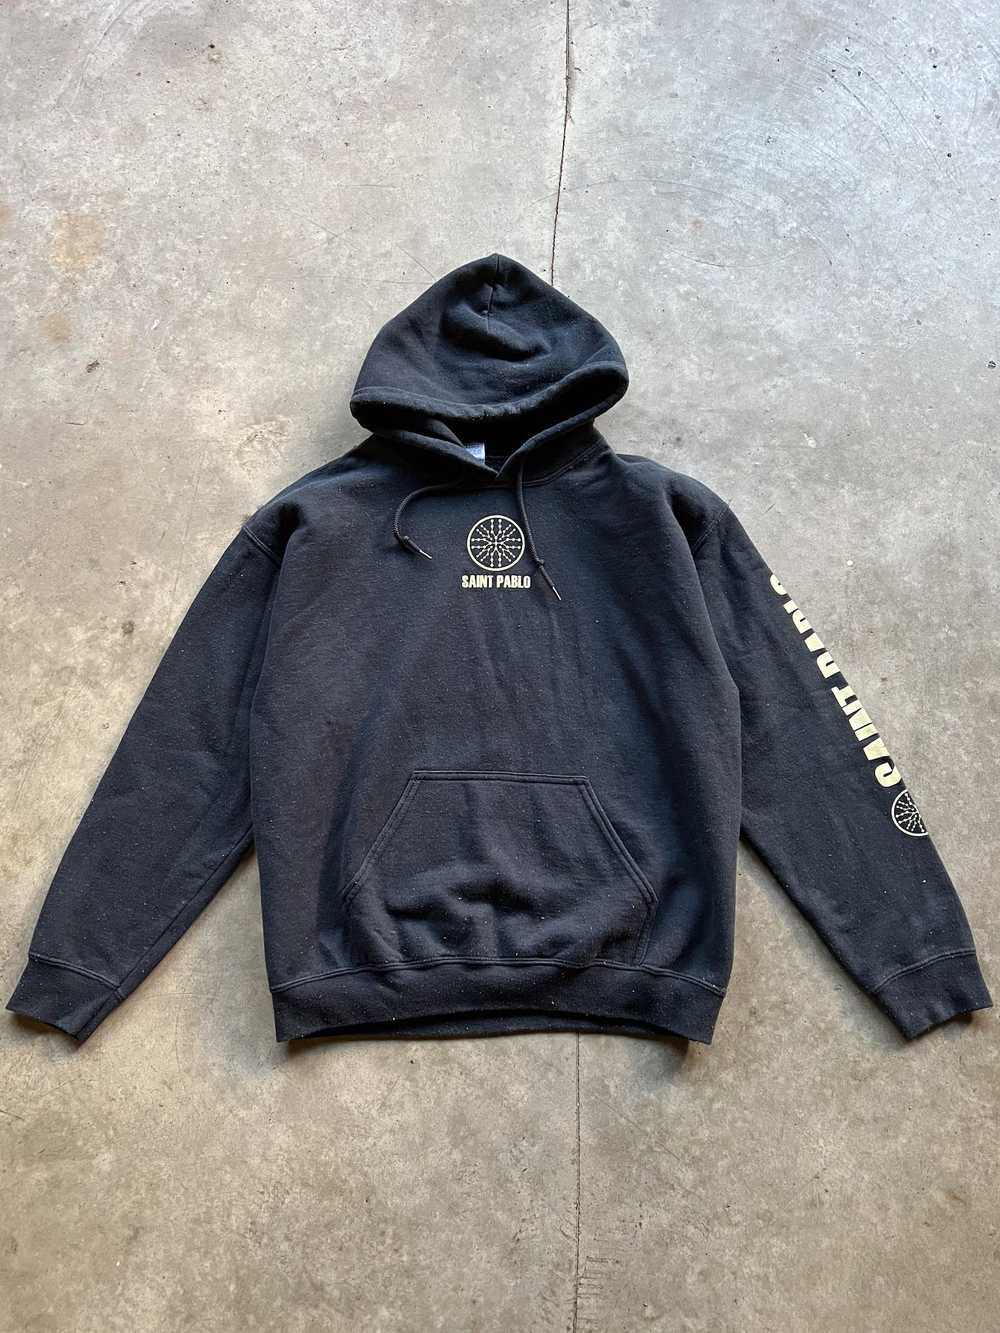 Kanye West × Streetwear Saint Pablo Tour hoodie - image 1